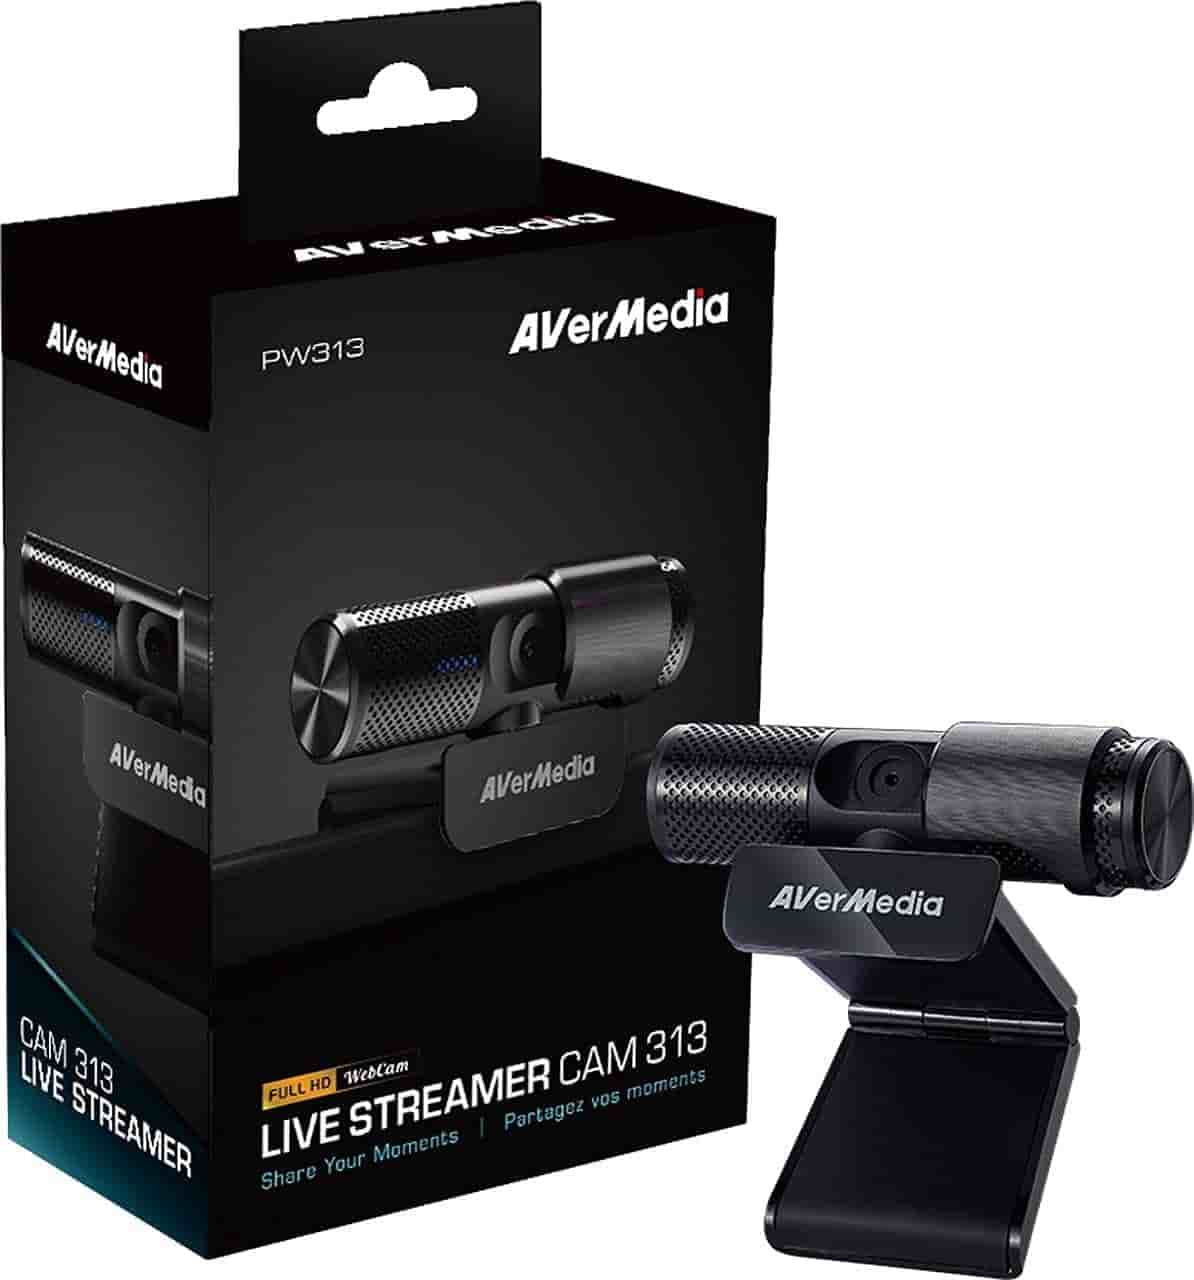 The Live Streamer Cam 313 PW313 min